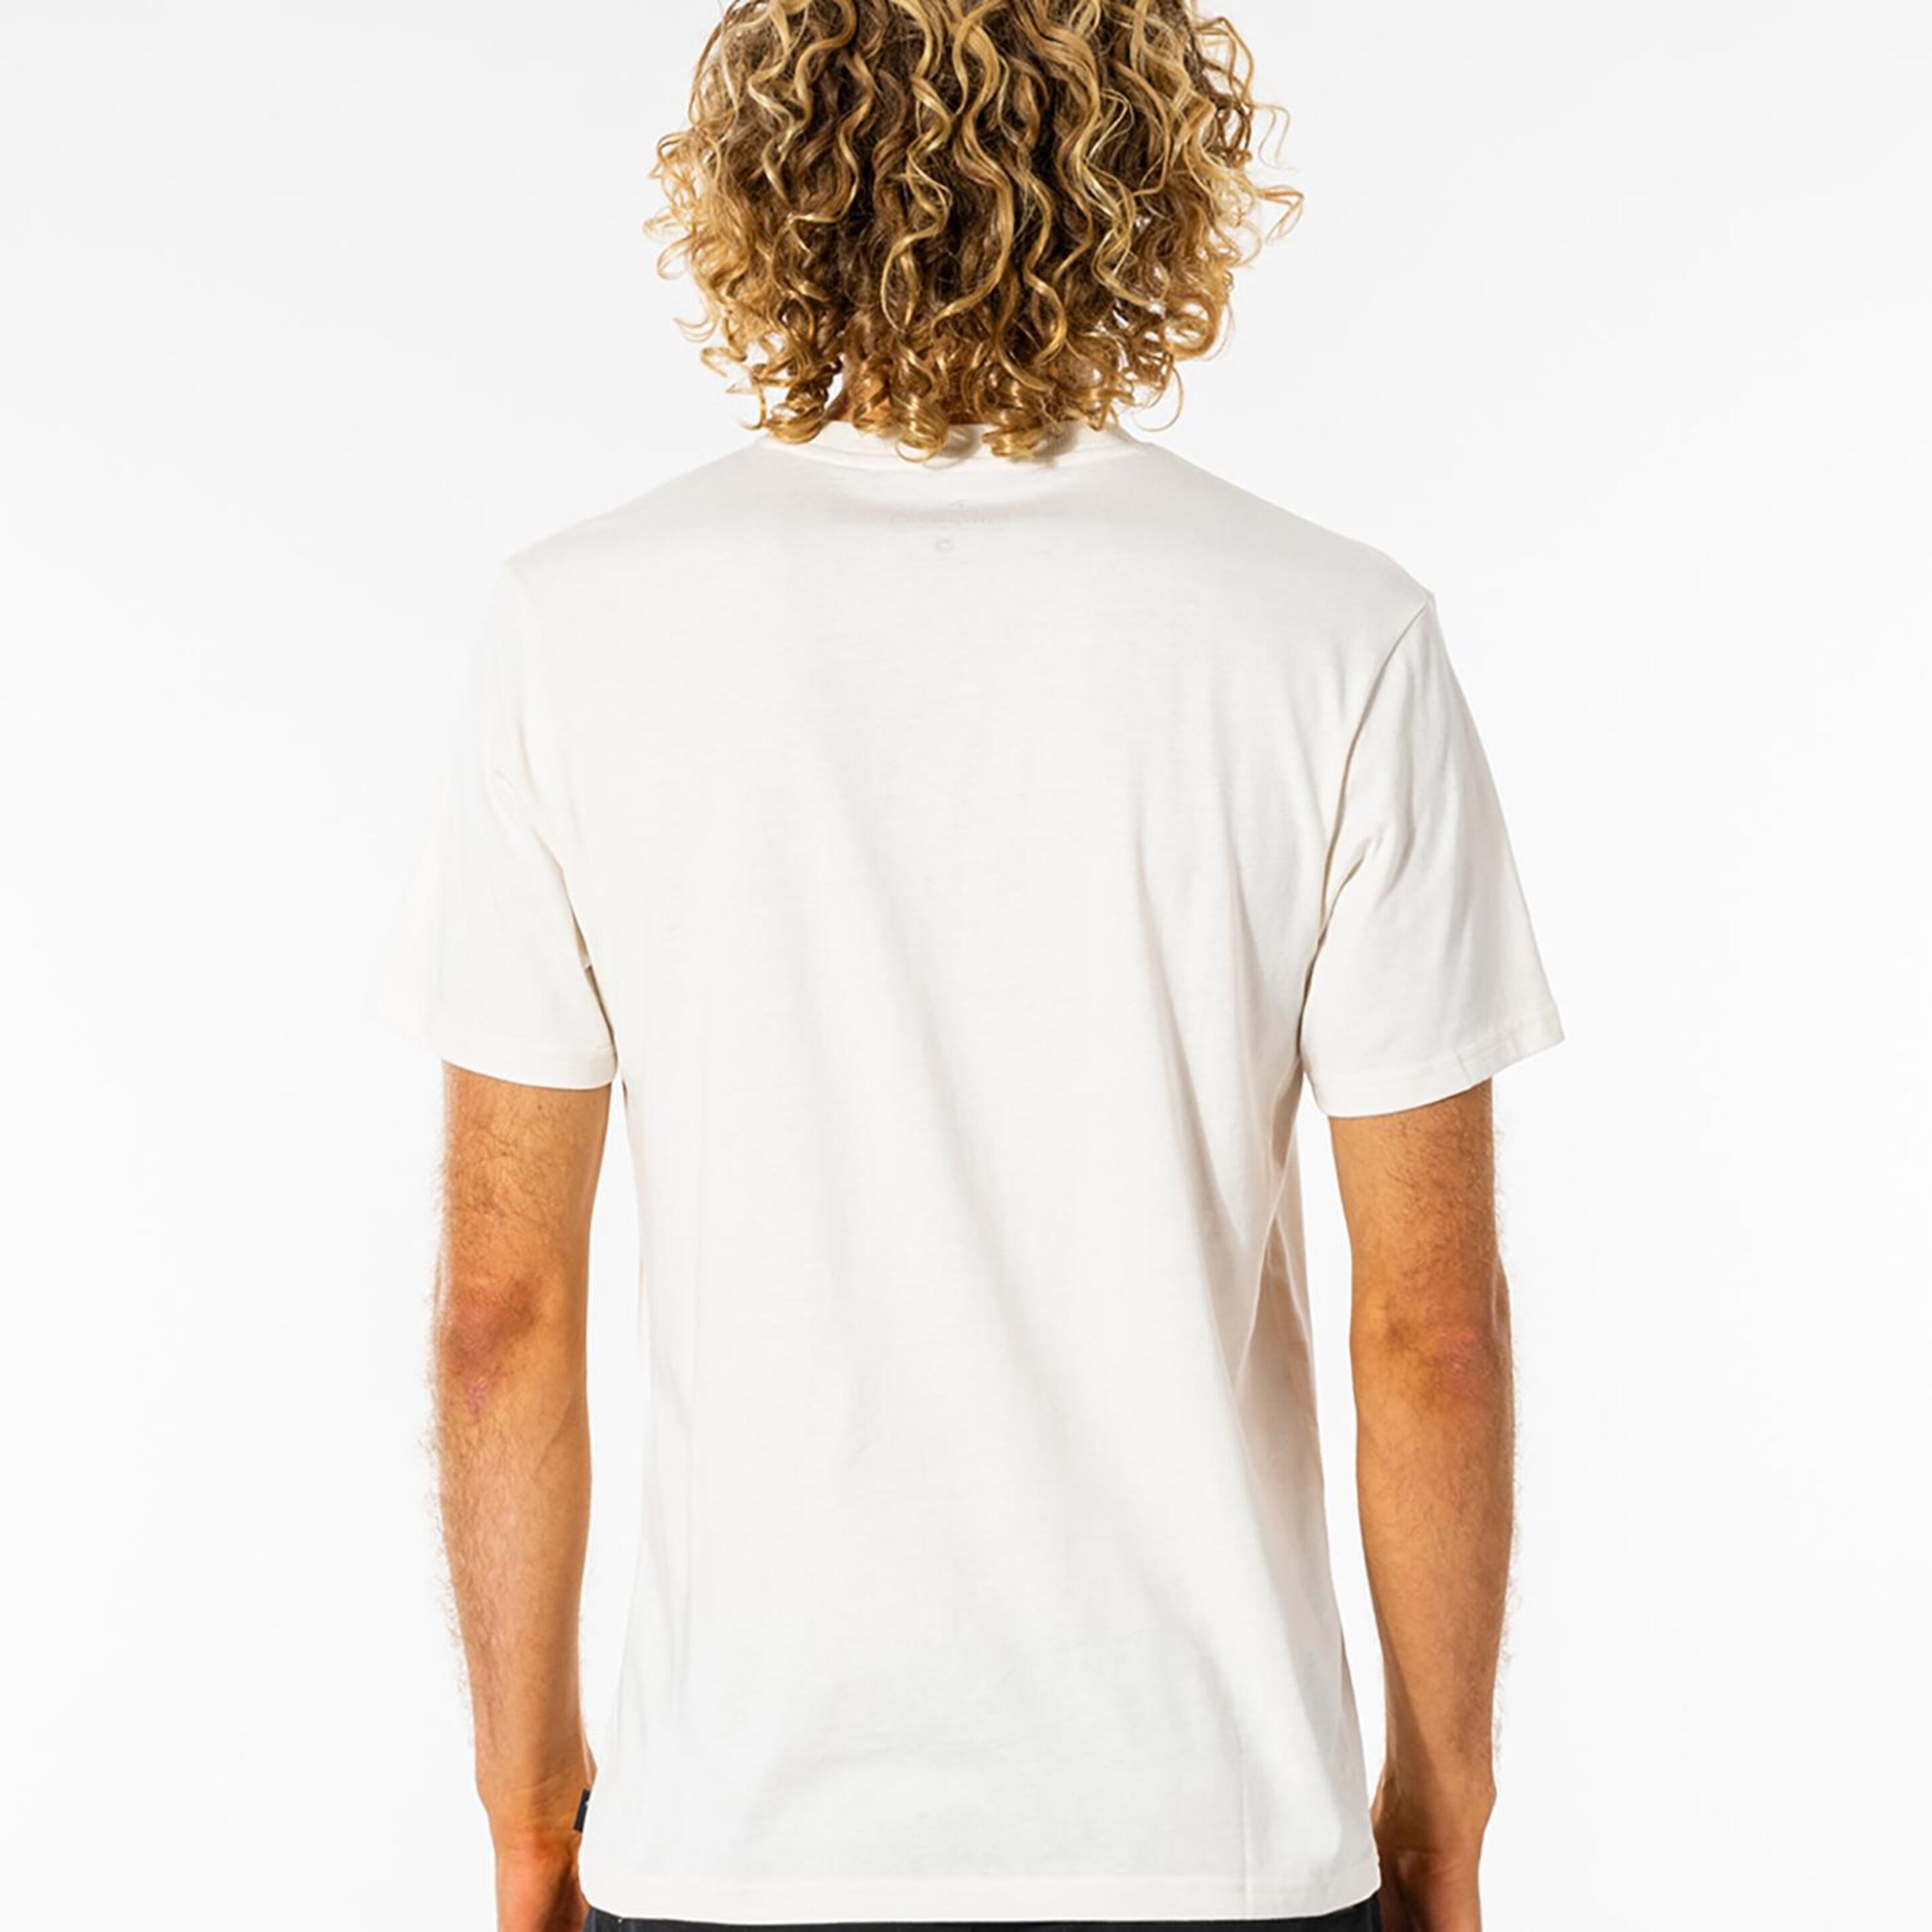 T-shirt Rip Curl Surf Revival